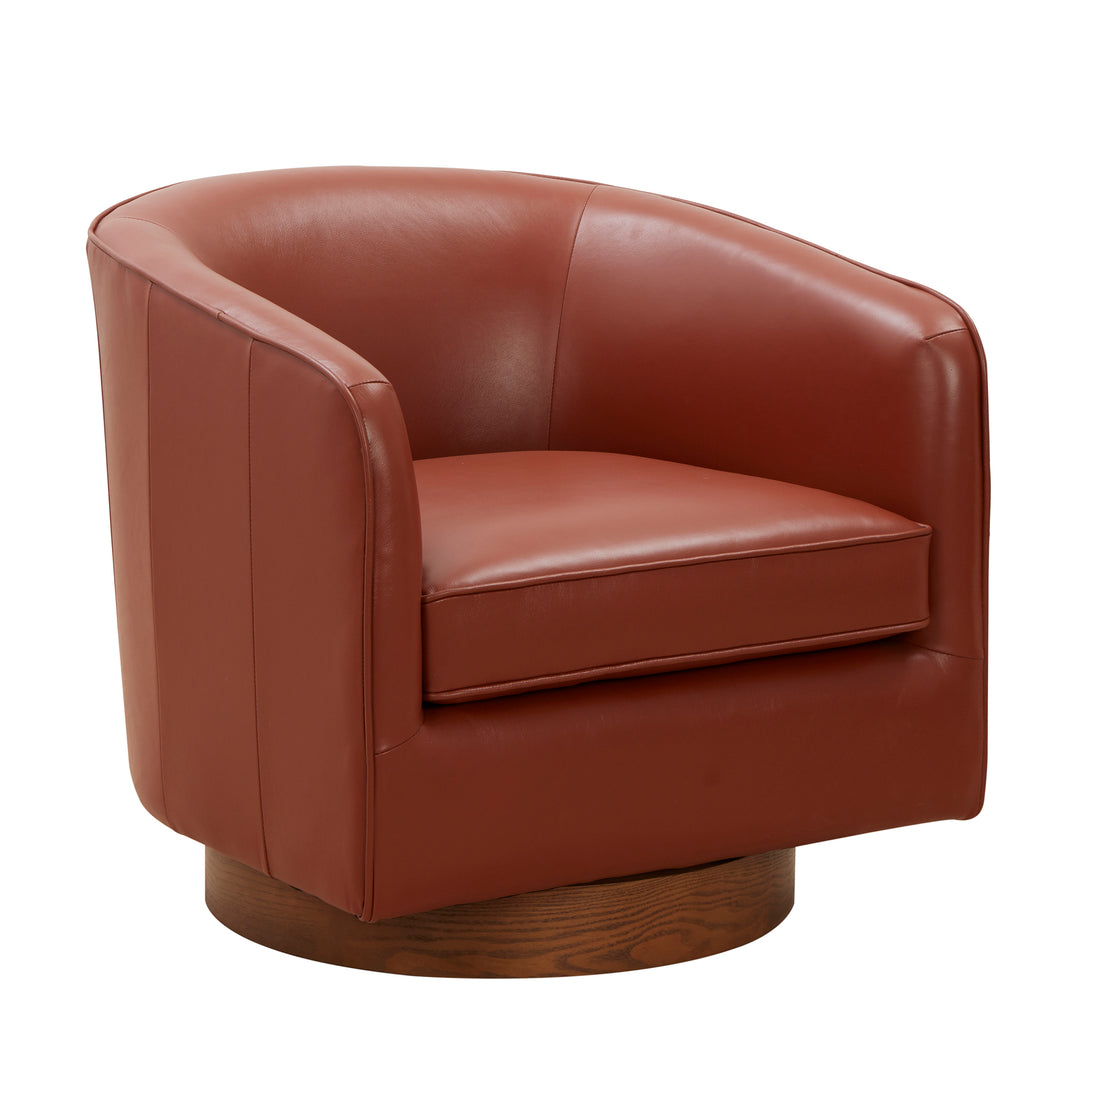 Tessa Caramel Top Grain Leather Wood Base Swivel Chair caramel-foam-leather